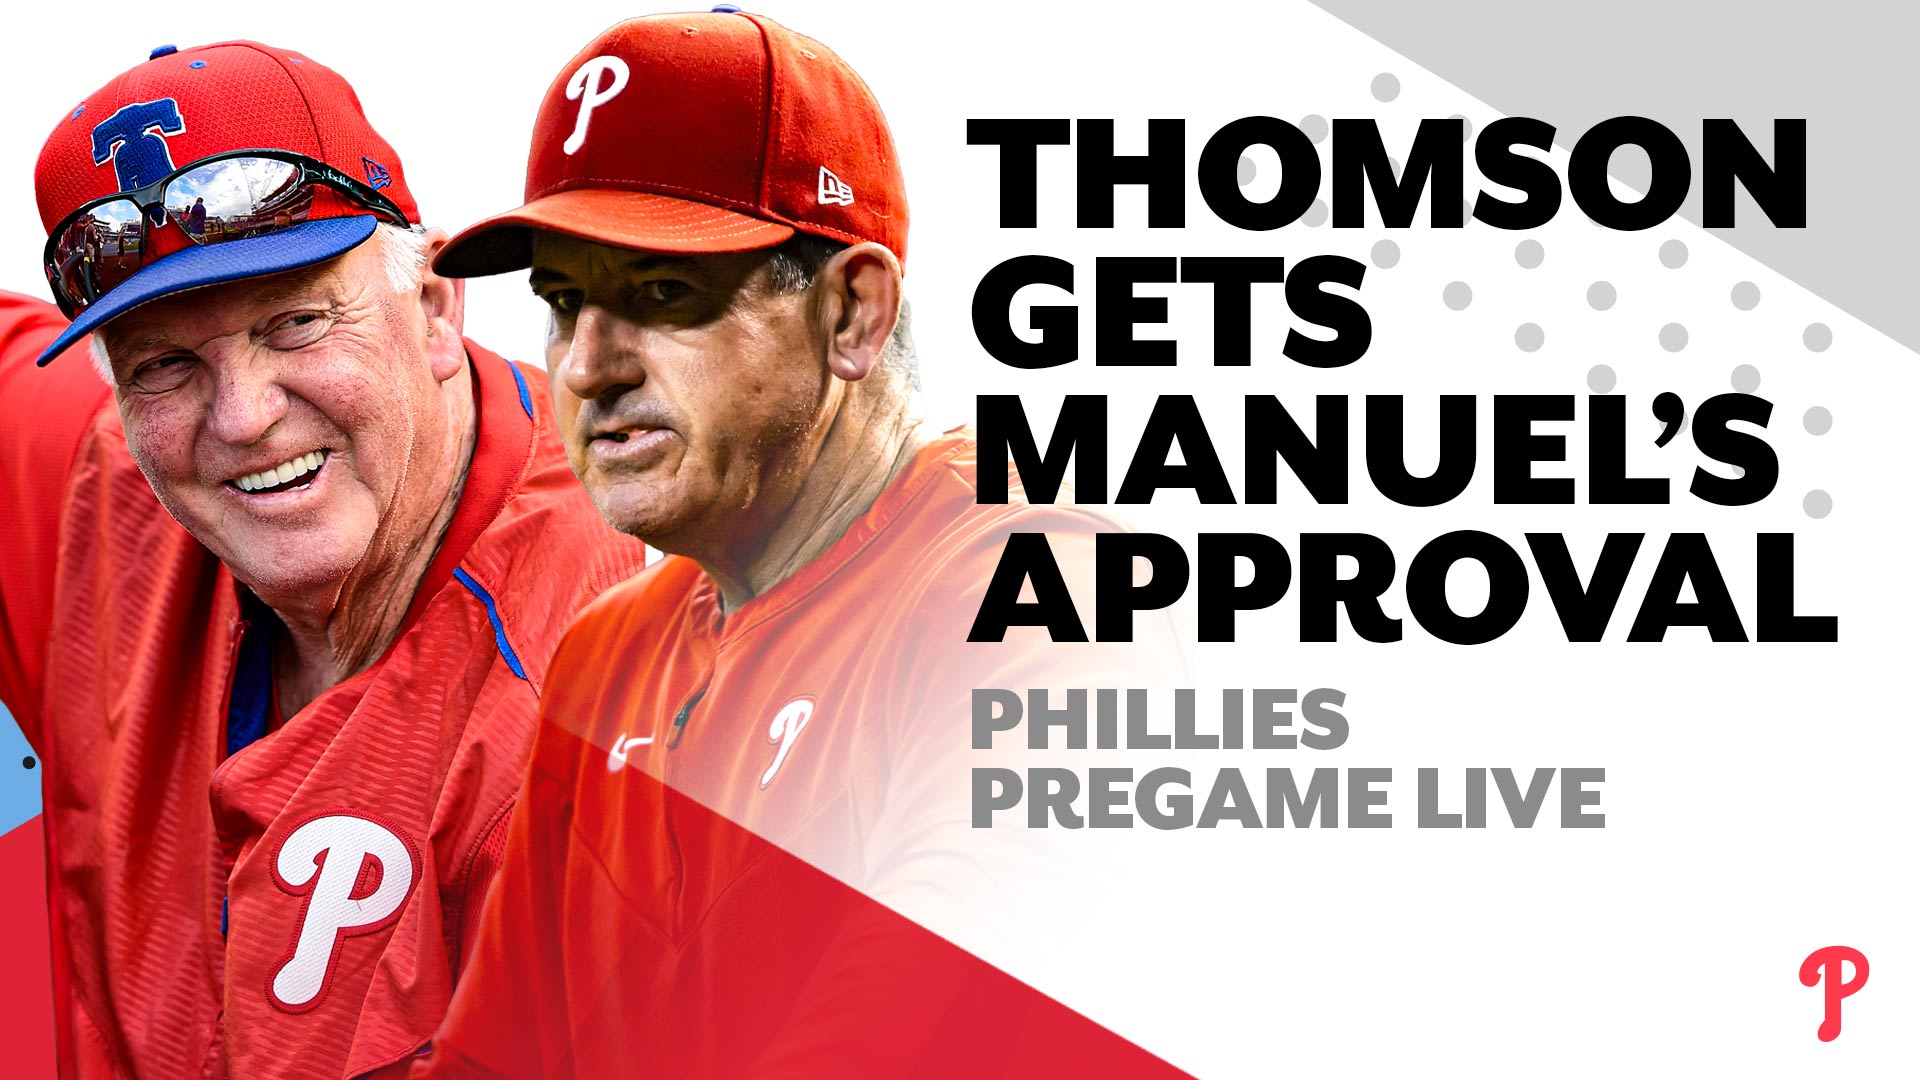 Rob Thomson: Phillies are raring to go as Spring Training kicks